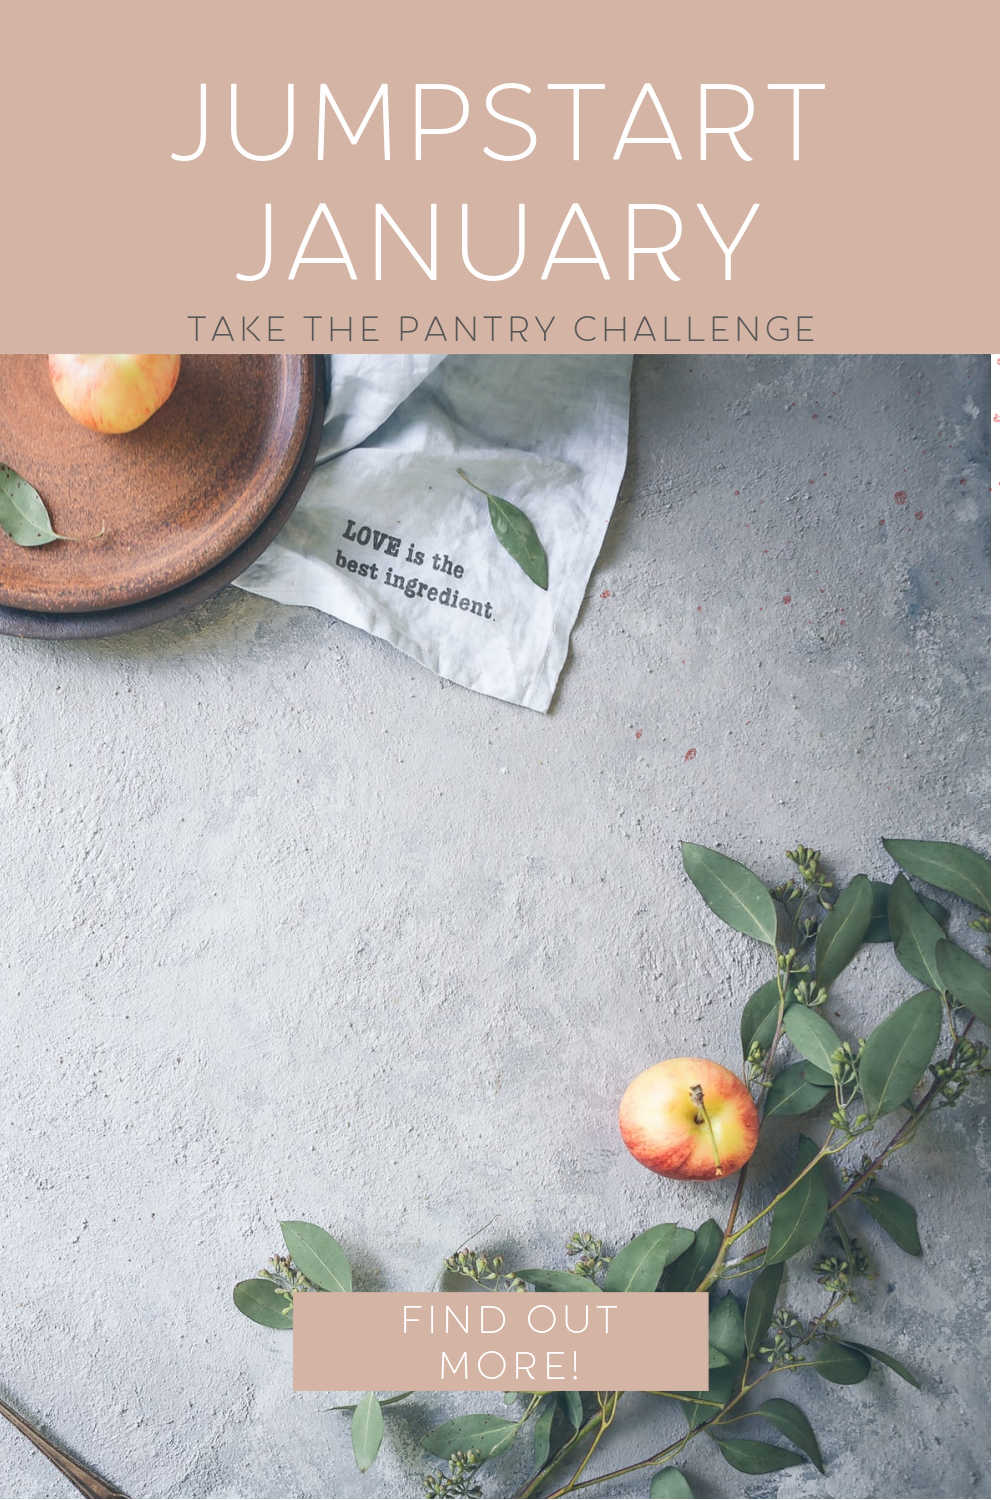 jumpstart january challenge pantry challenge